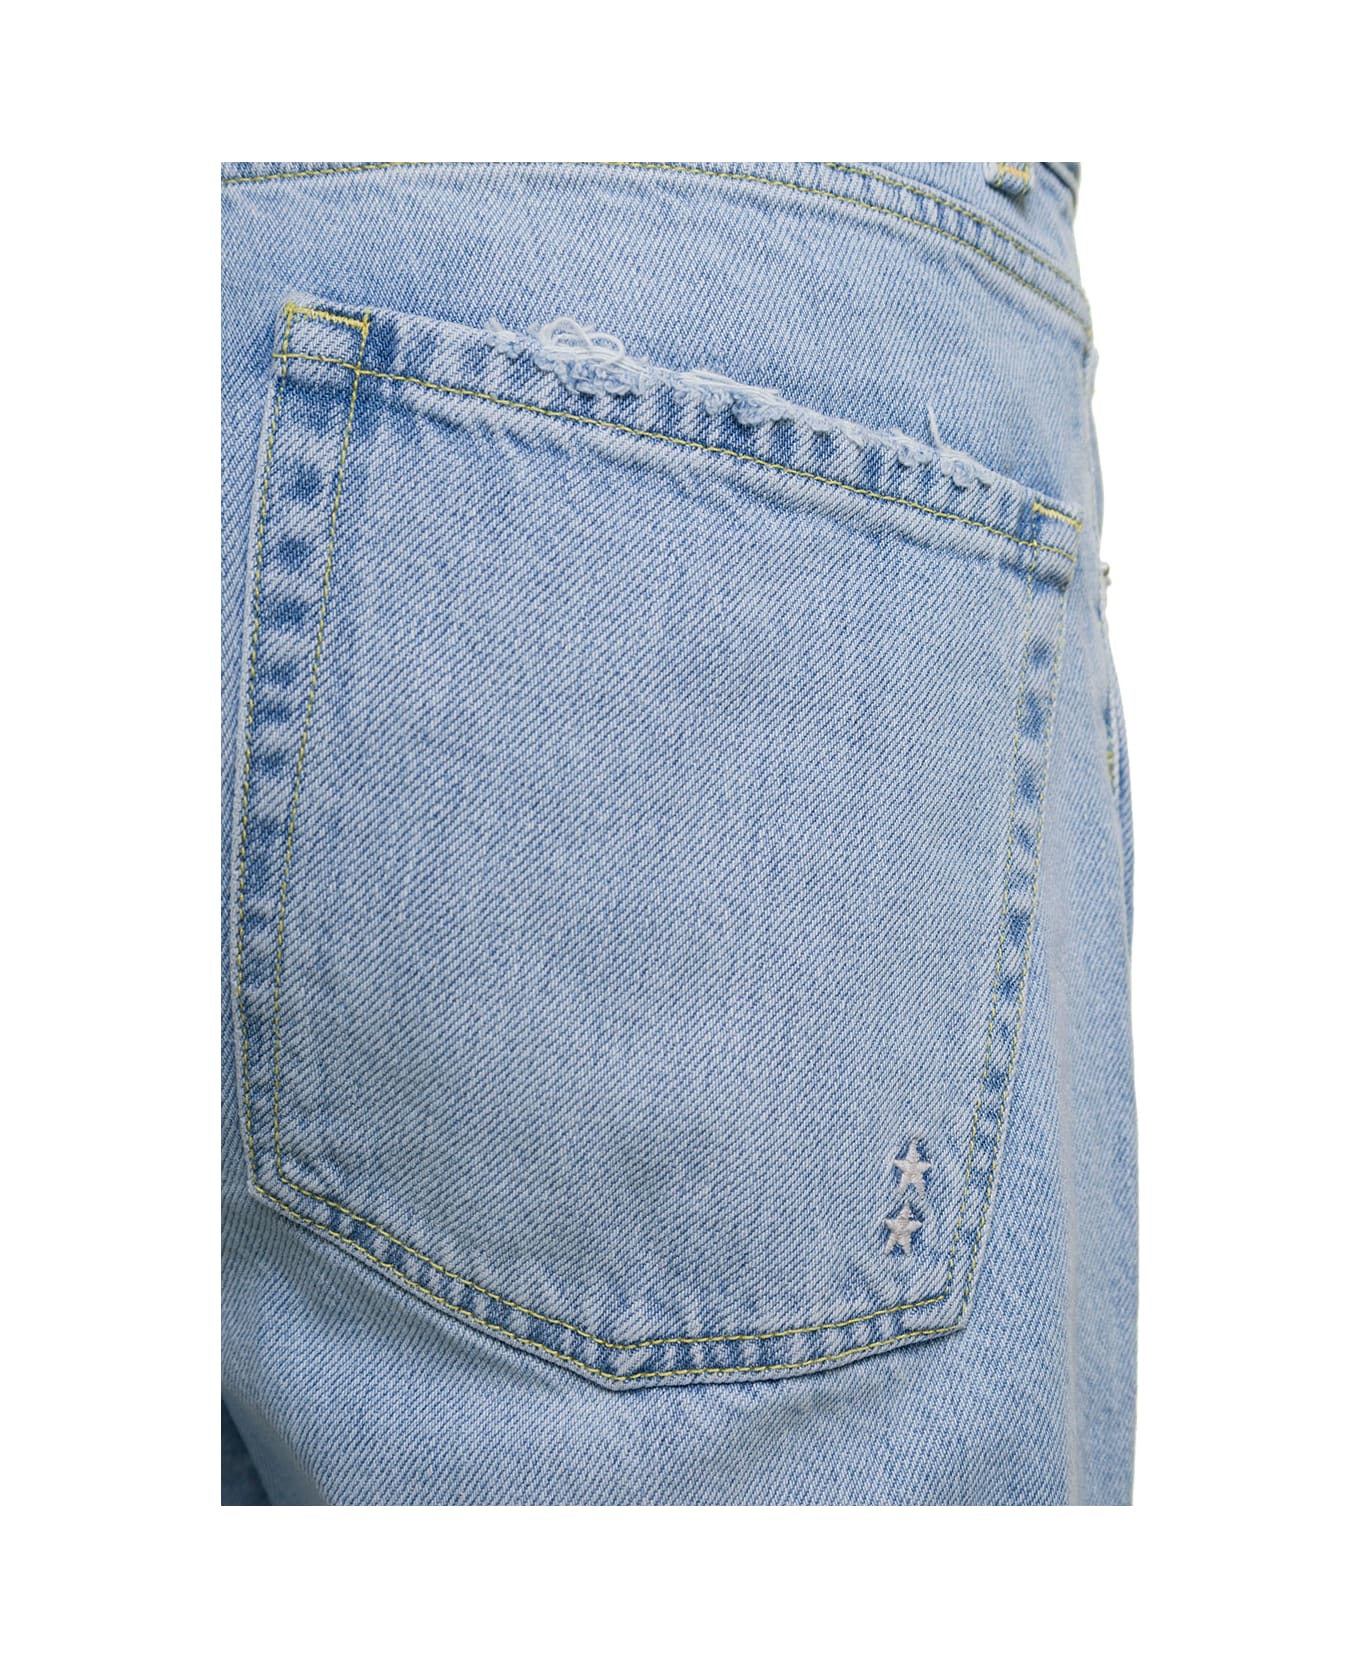 Icon Denim 'kanye' Light Blue 5-pocket Jeans With Logo Patch In Cotton Denim Man - Light blue デニム